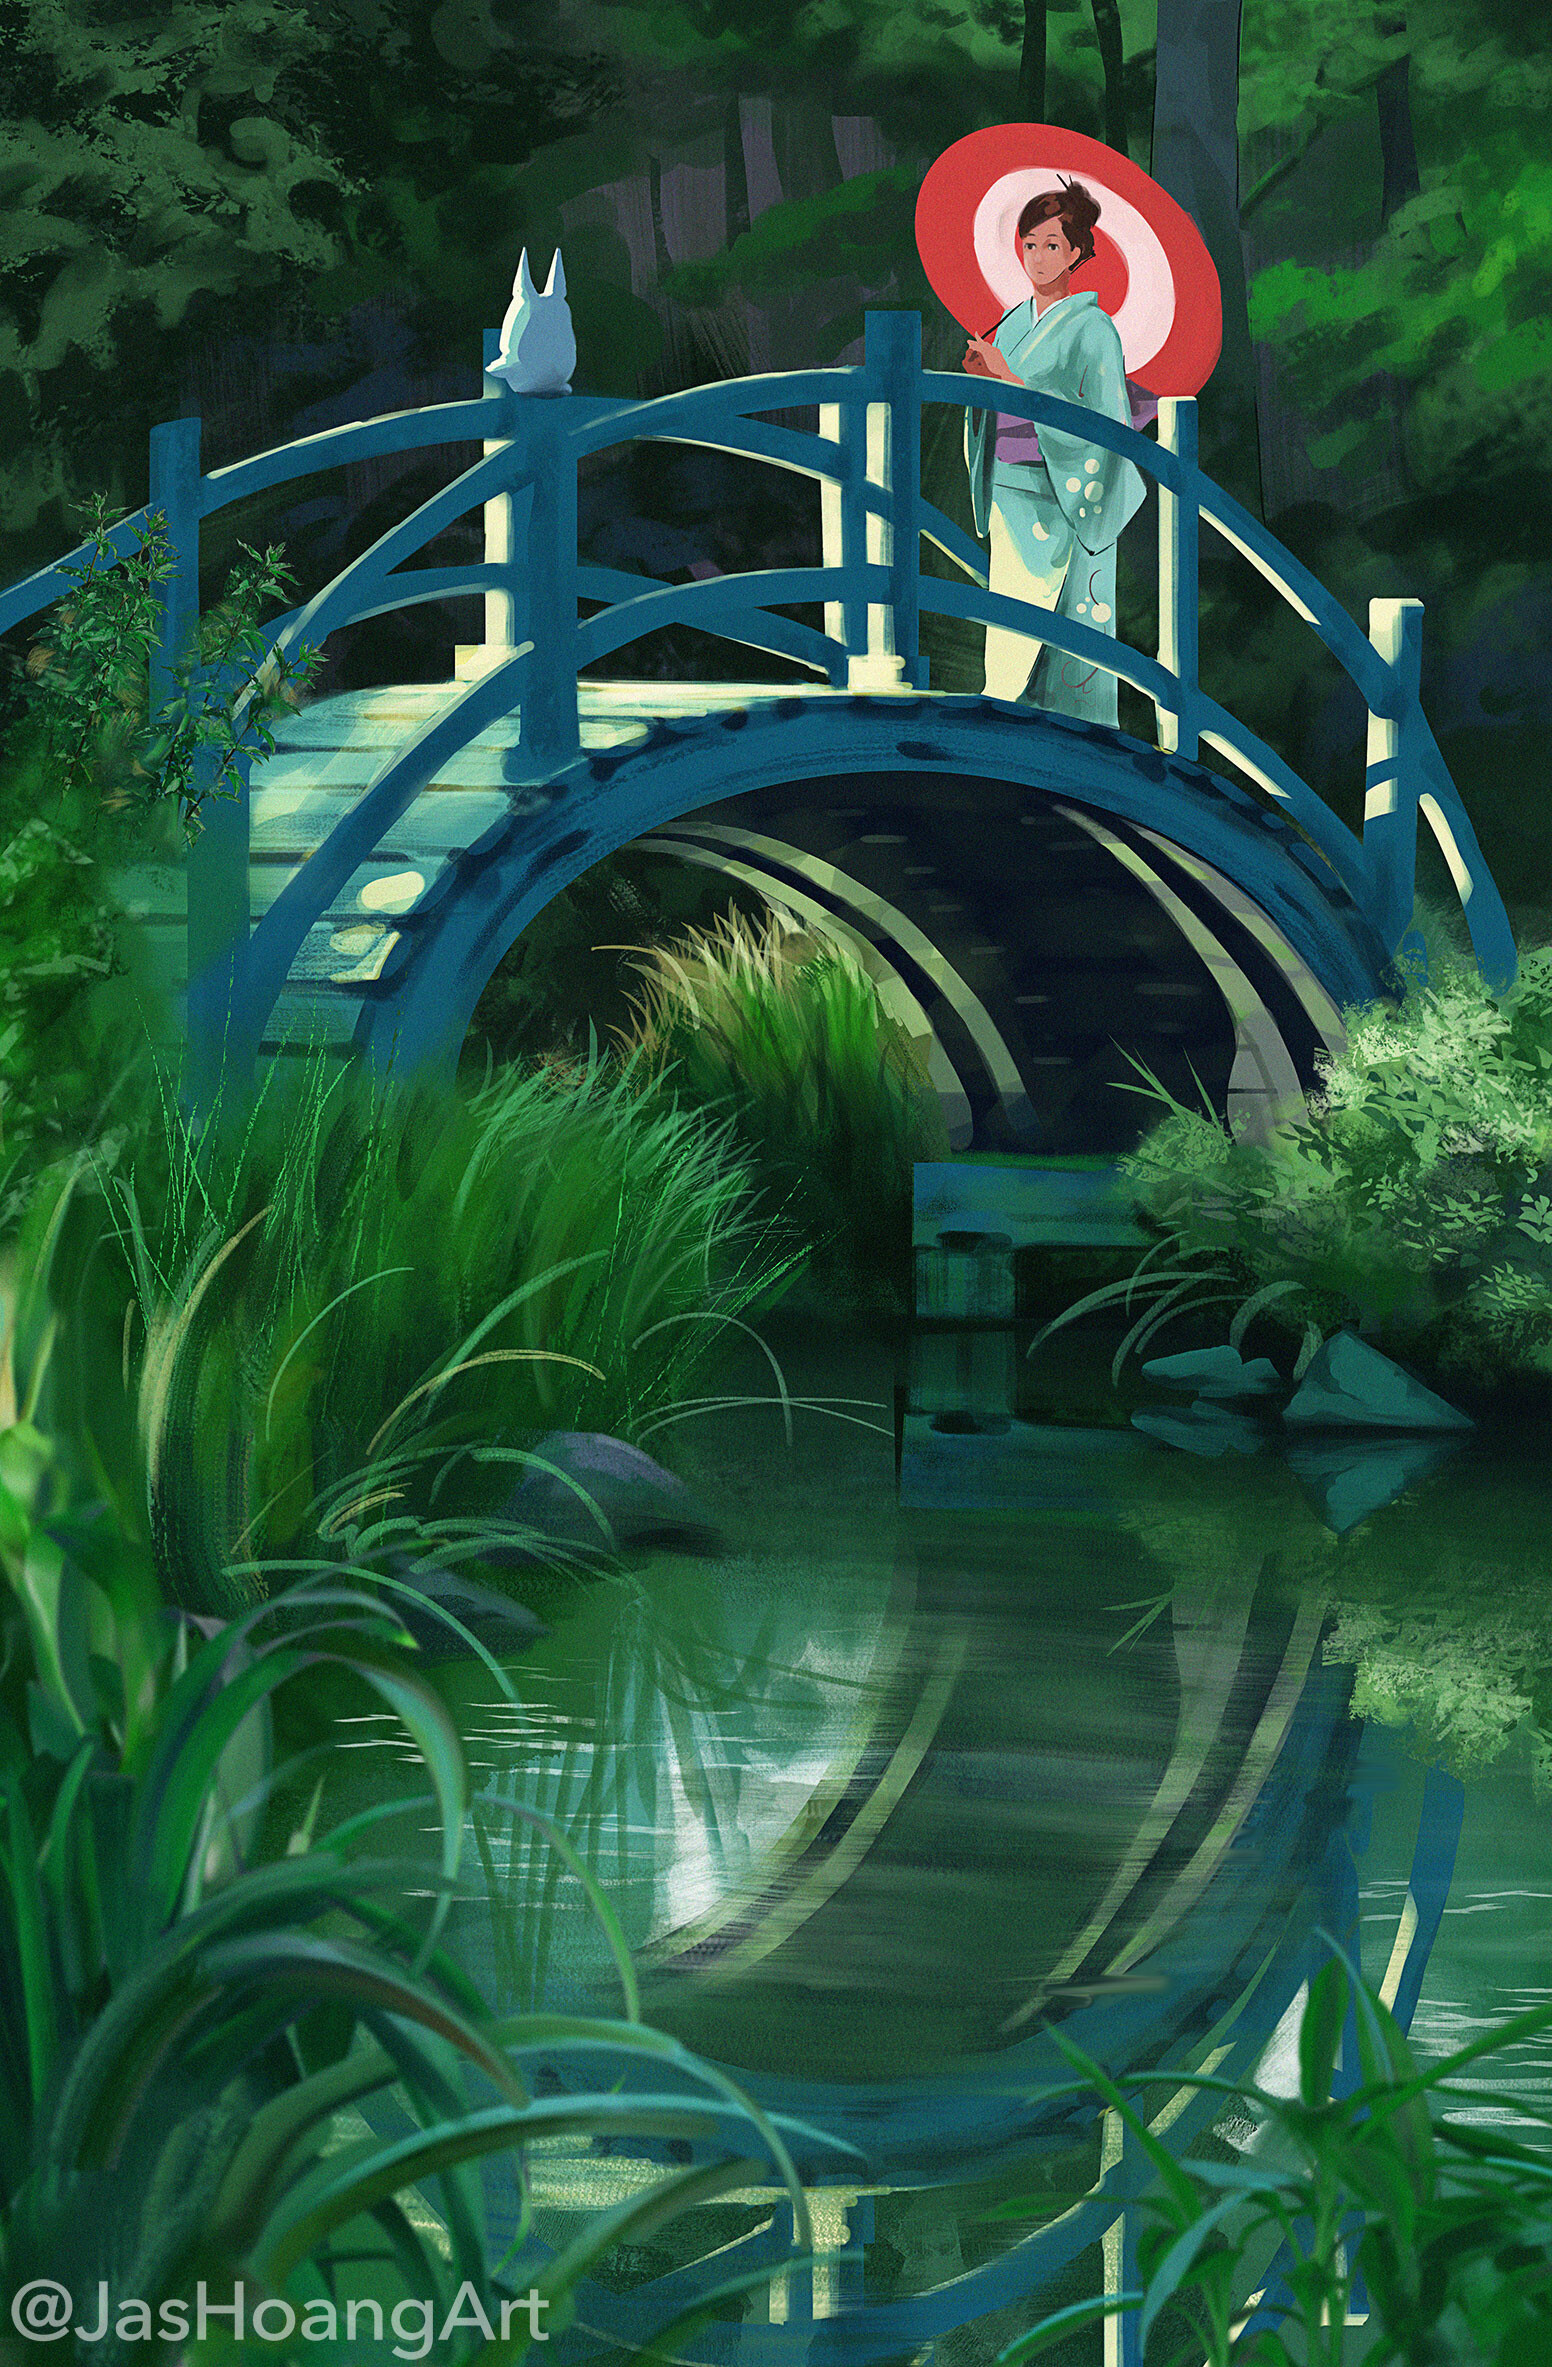 ArtStation - Studio Ghibli inspired